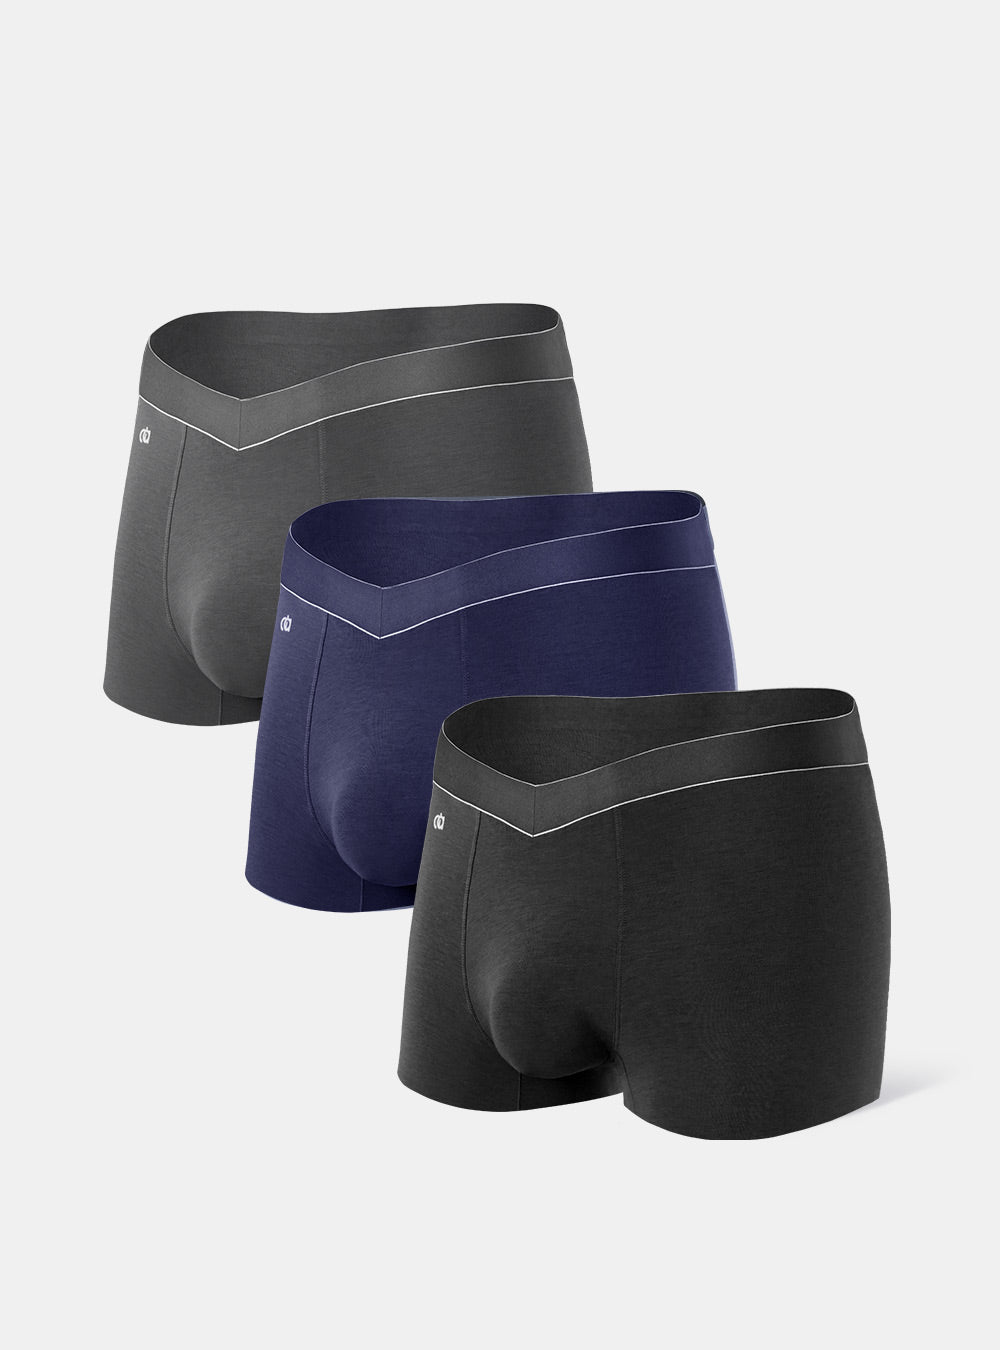 DAVID ARCHY Men's Underwear Micro Modal Dual Pouch Trunks Ball